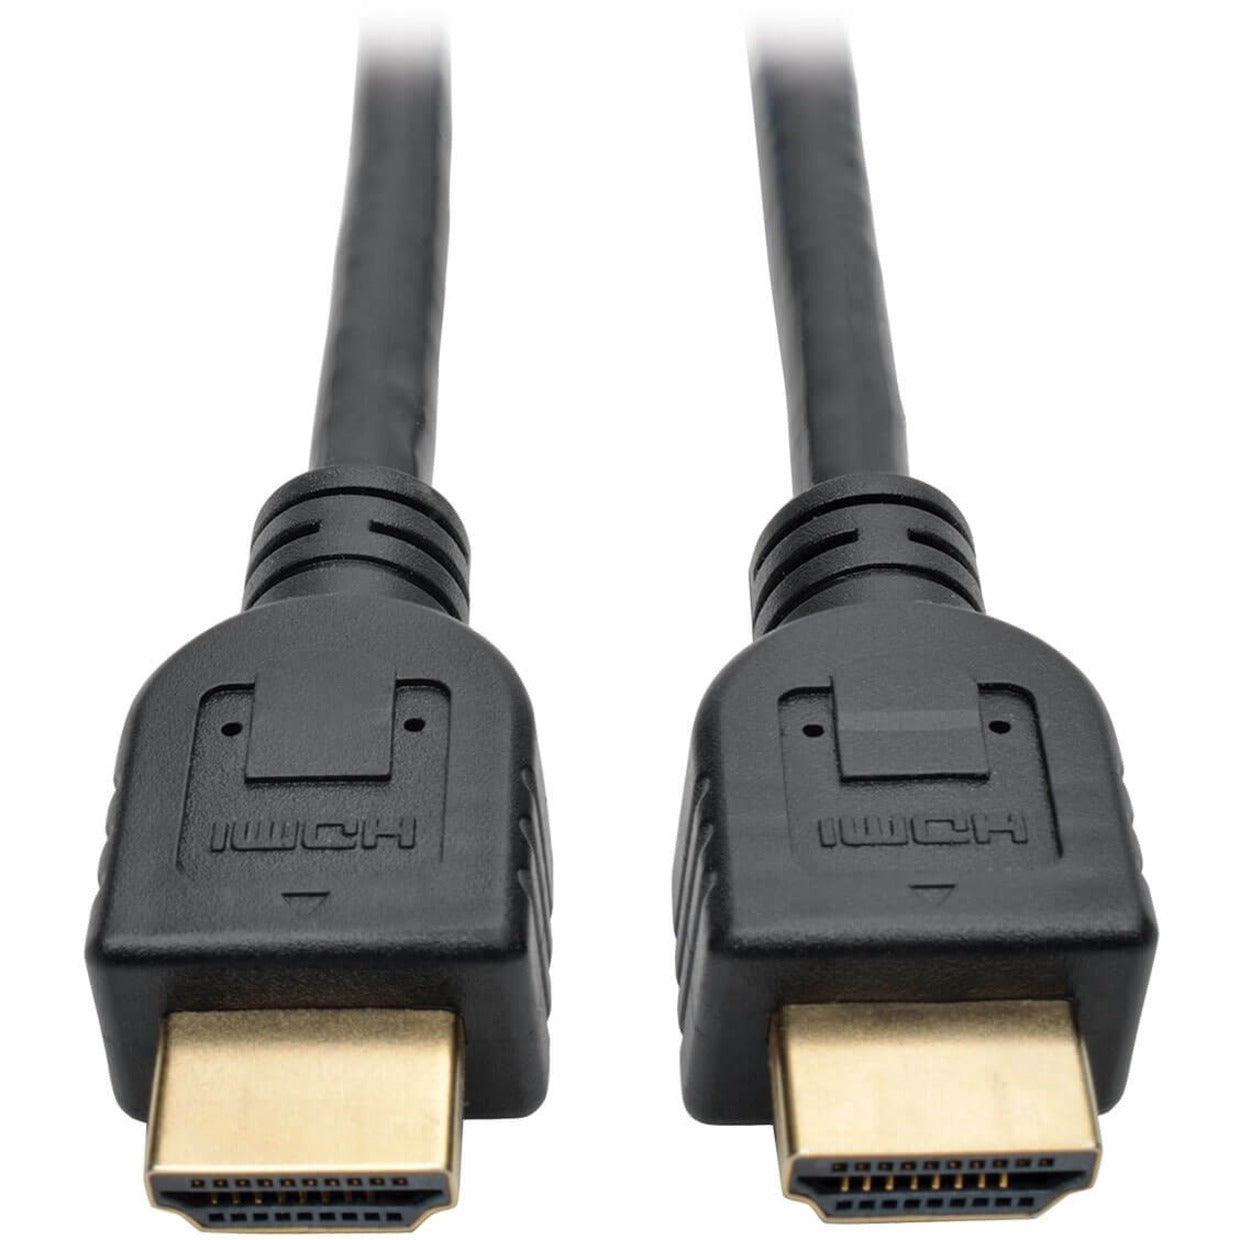 Tripp Lite P569-006-CL3 HDMI Audio/Video Cable, 6 ft, UHD 4K x 2K, Gold-Plated Connectors, Lifetime Warranty